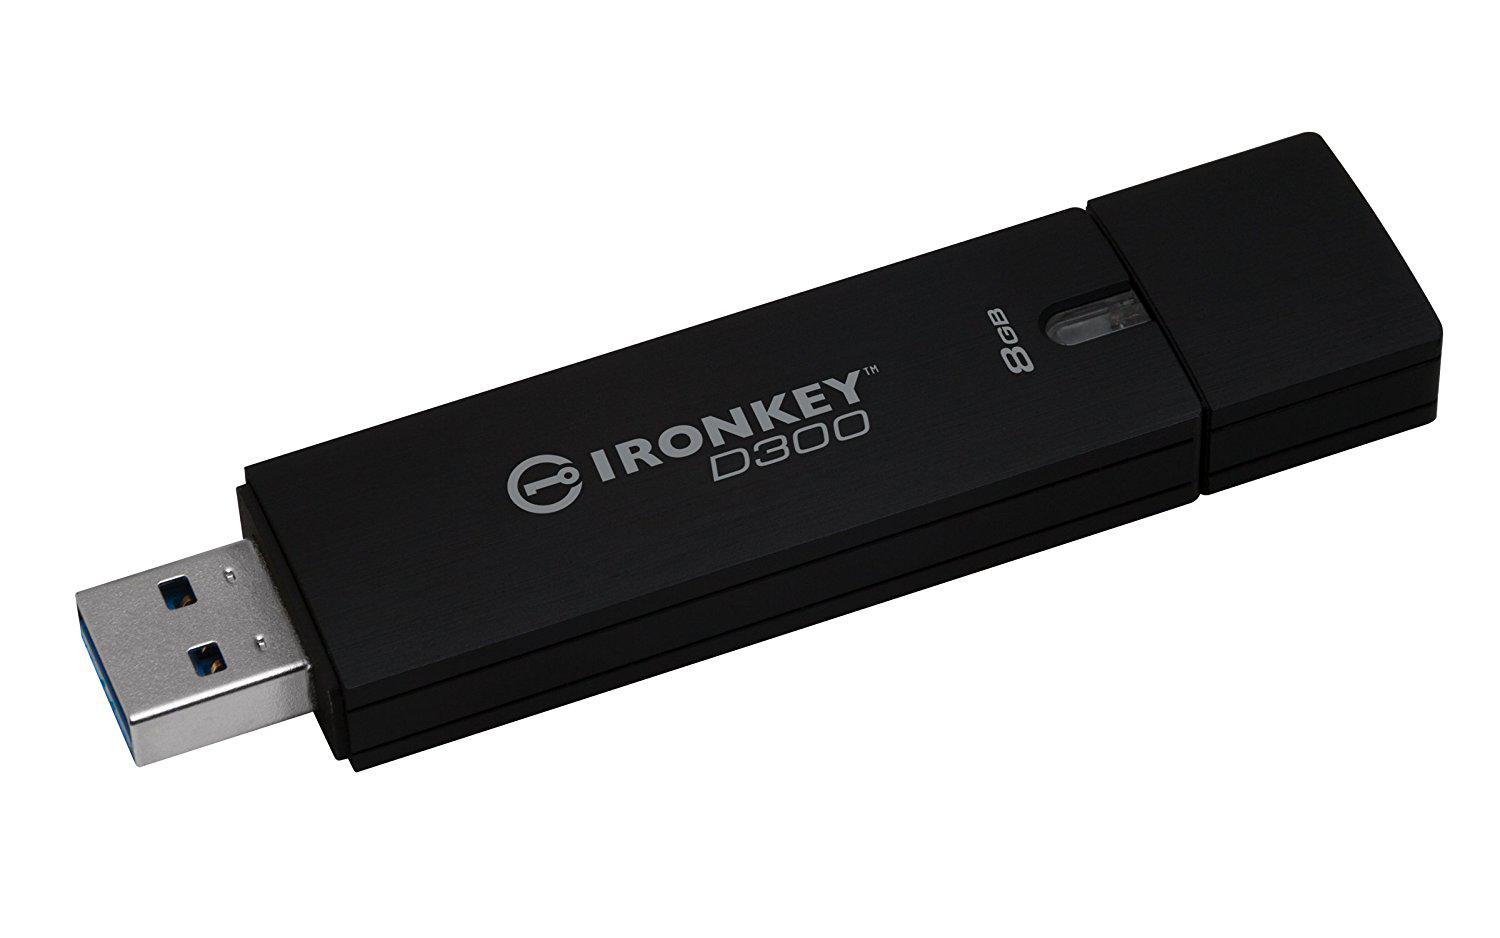 Memorie USB Flash Drive Kingston, 8GB, IronKey D300 Managed Encrypted, USB 3.0